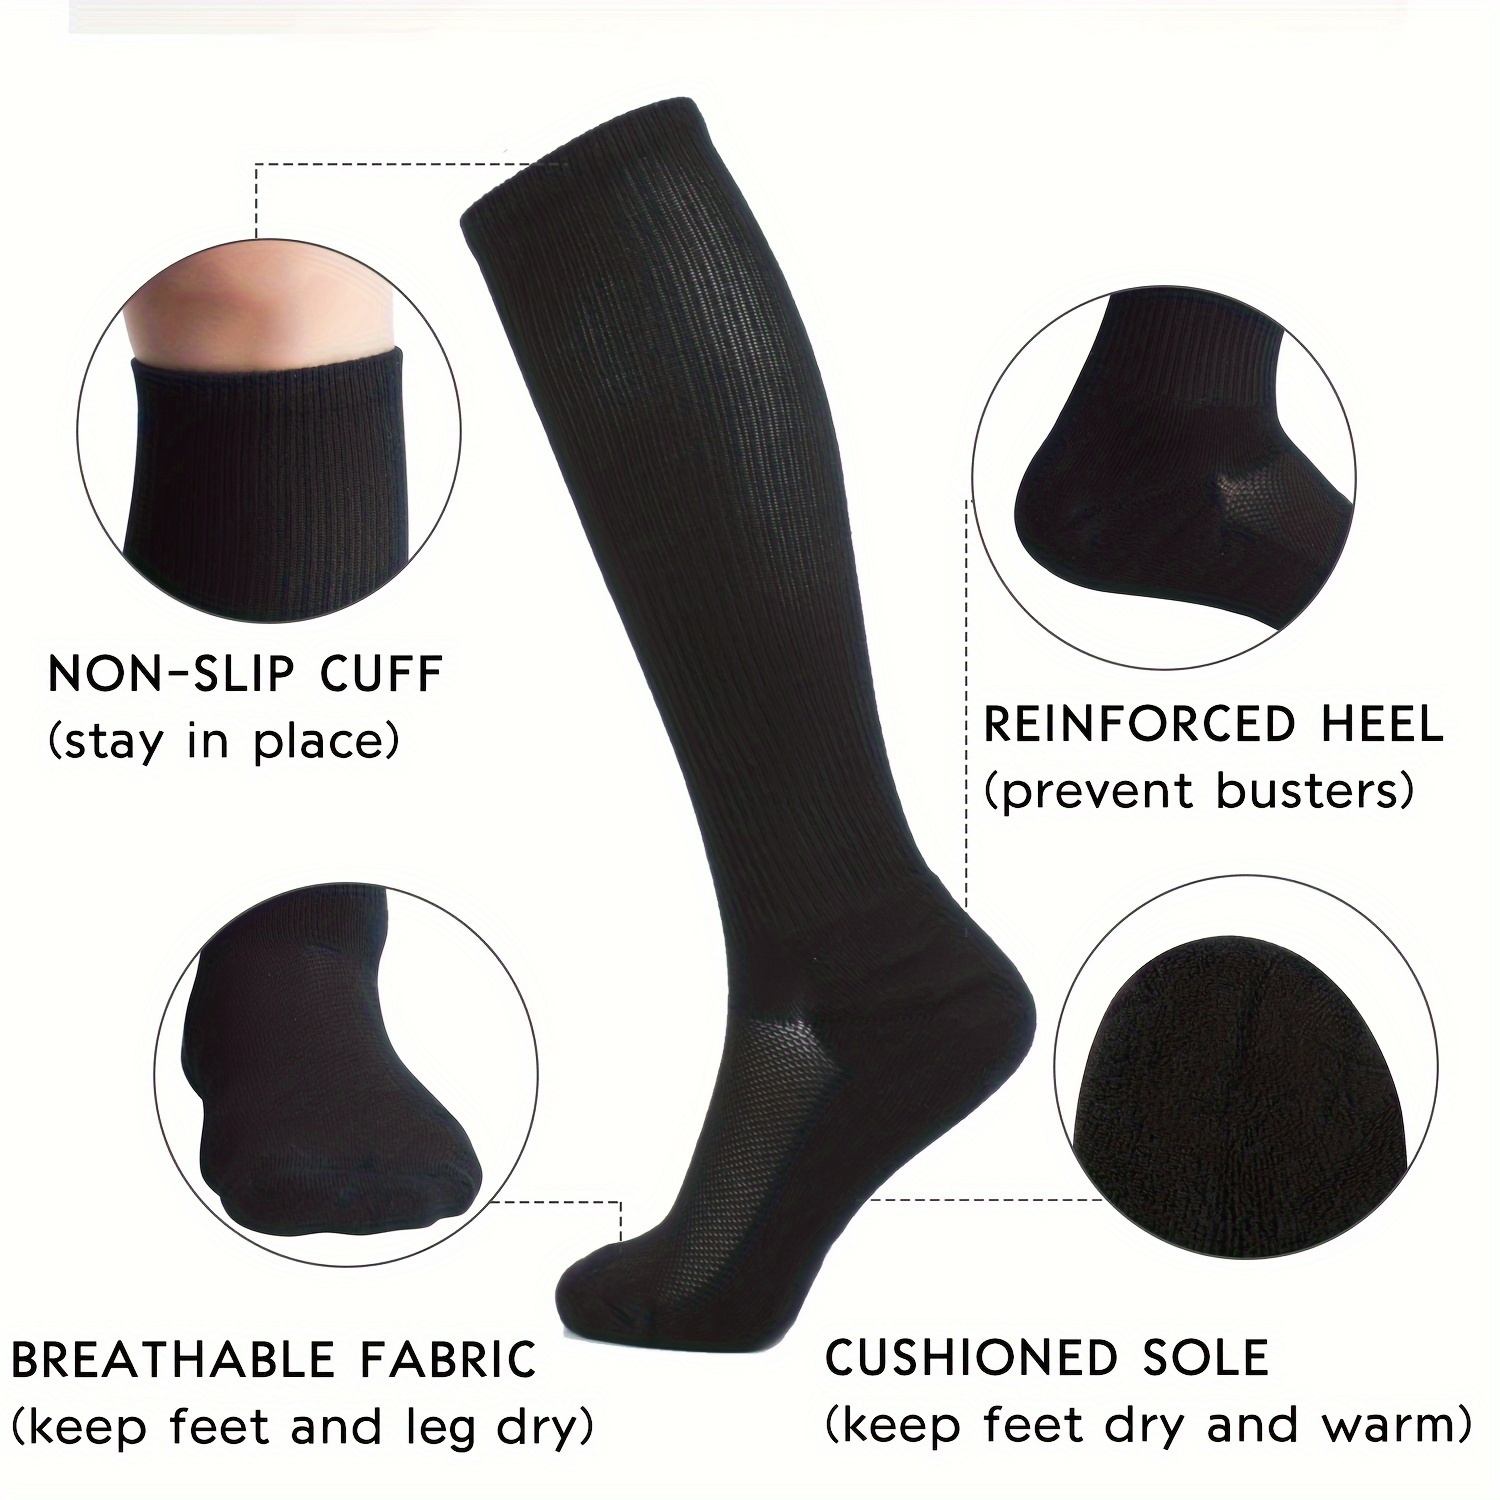 Stay Warm with Compression Socks